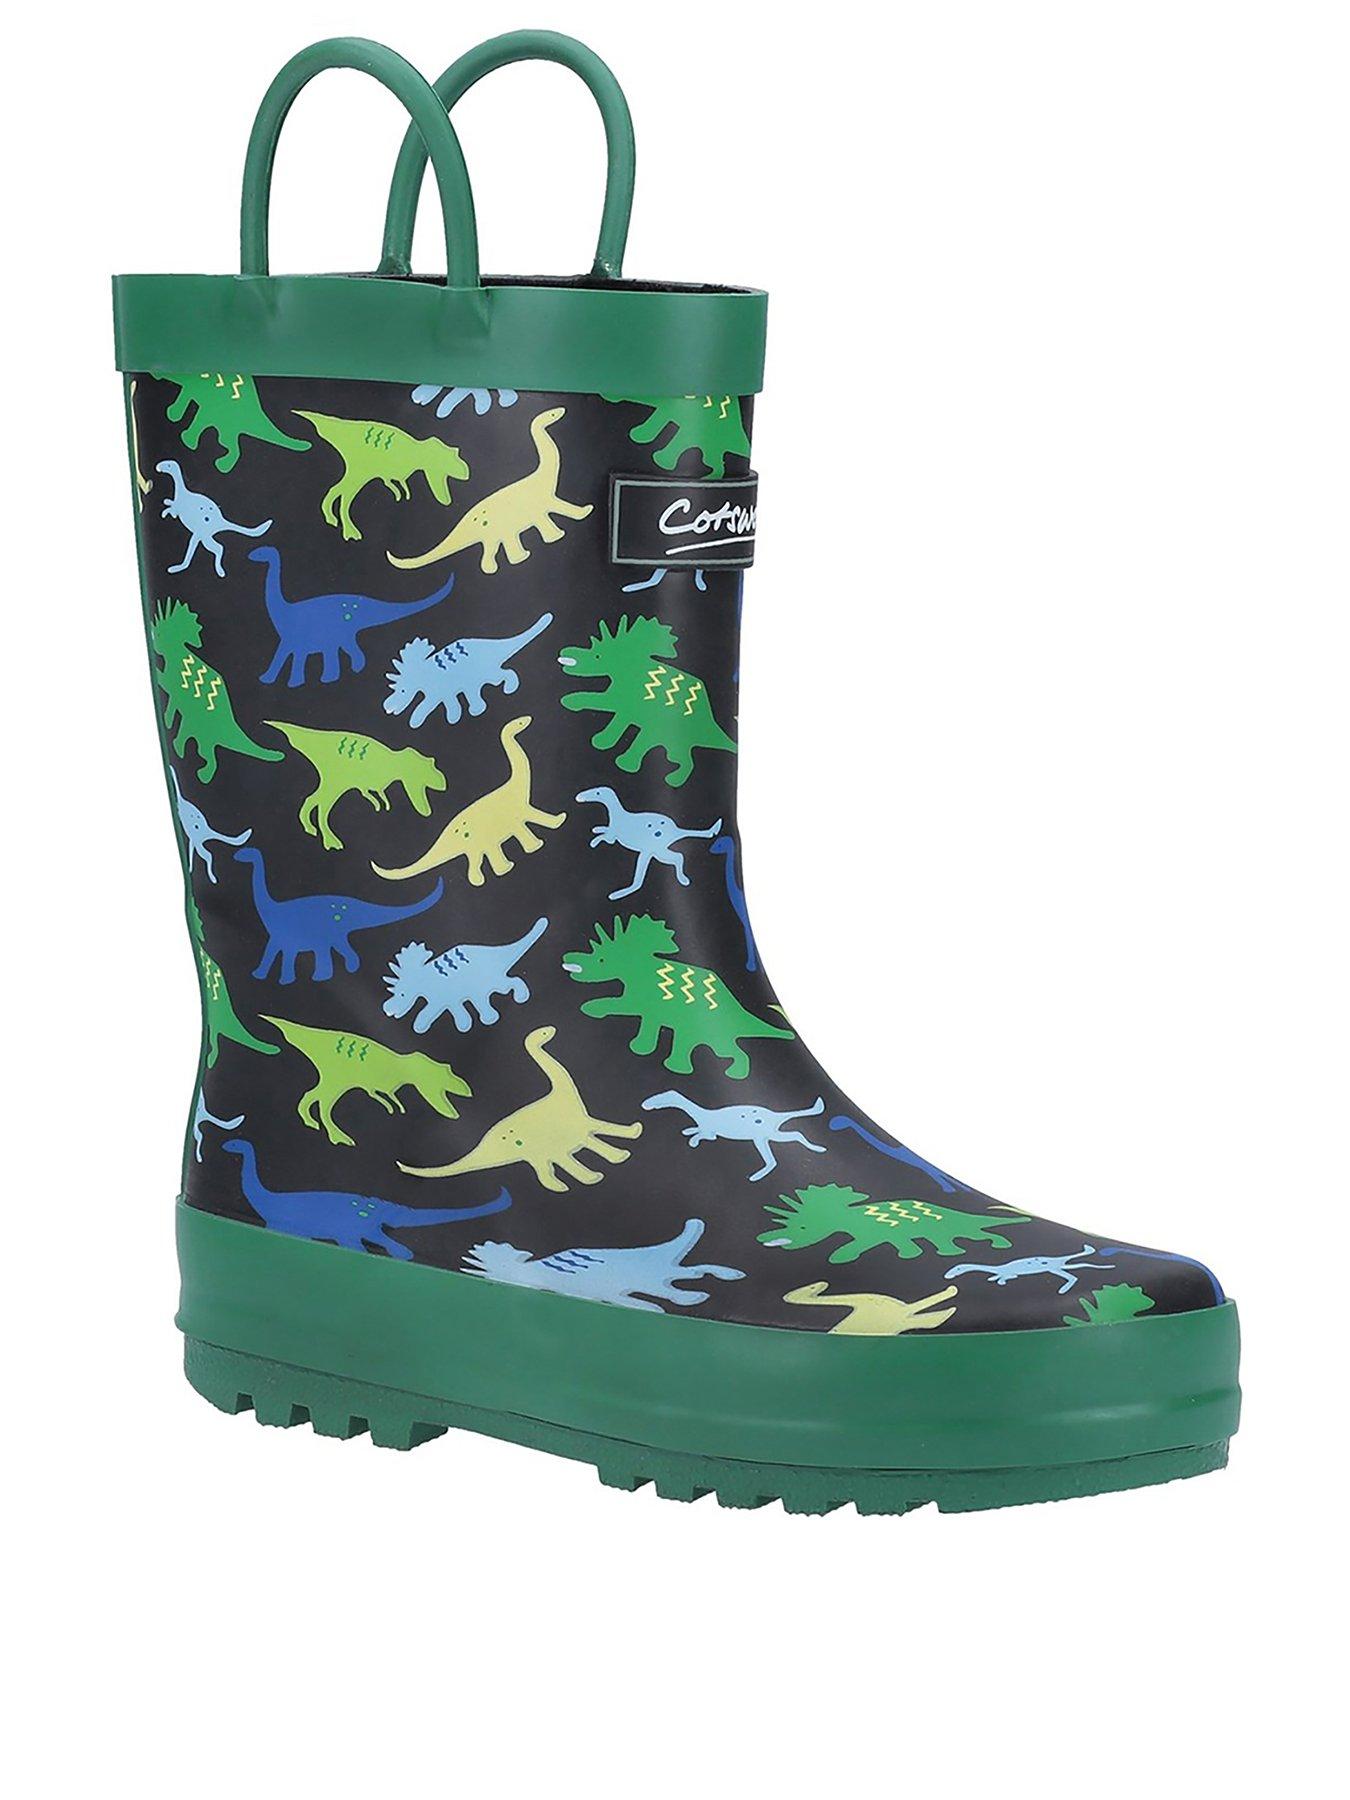 Shoes & boots Dinosaur Wellington Boot - Navy